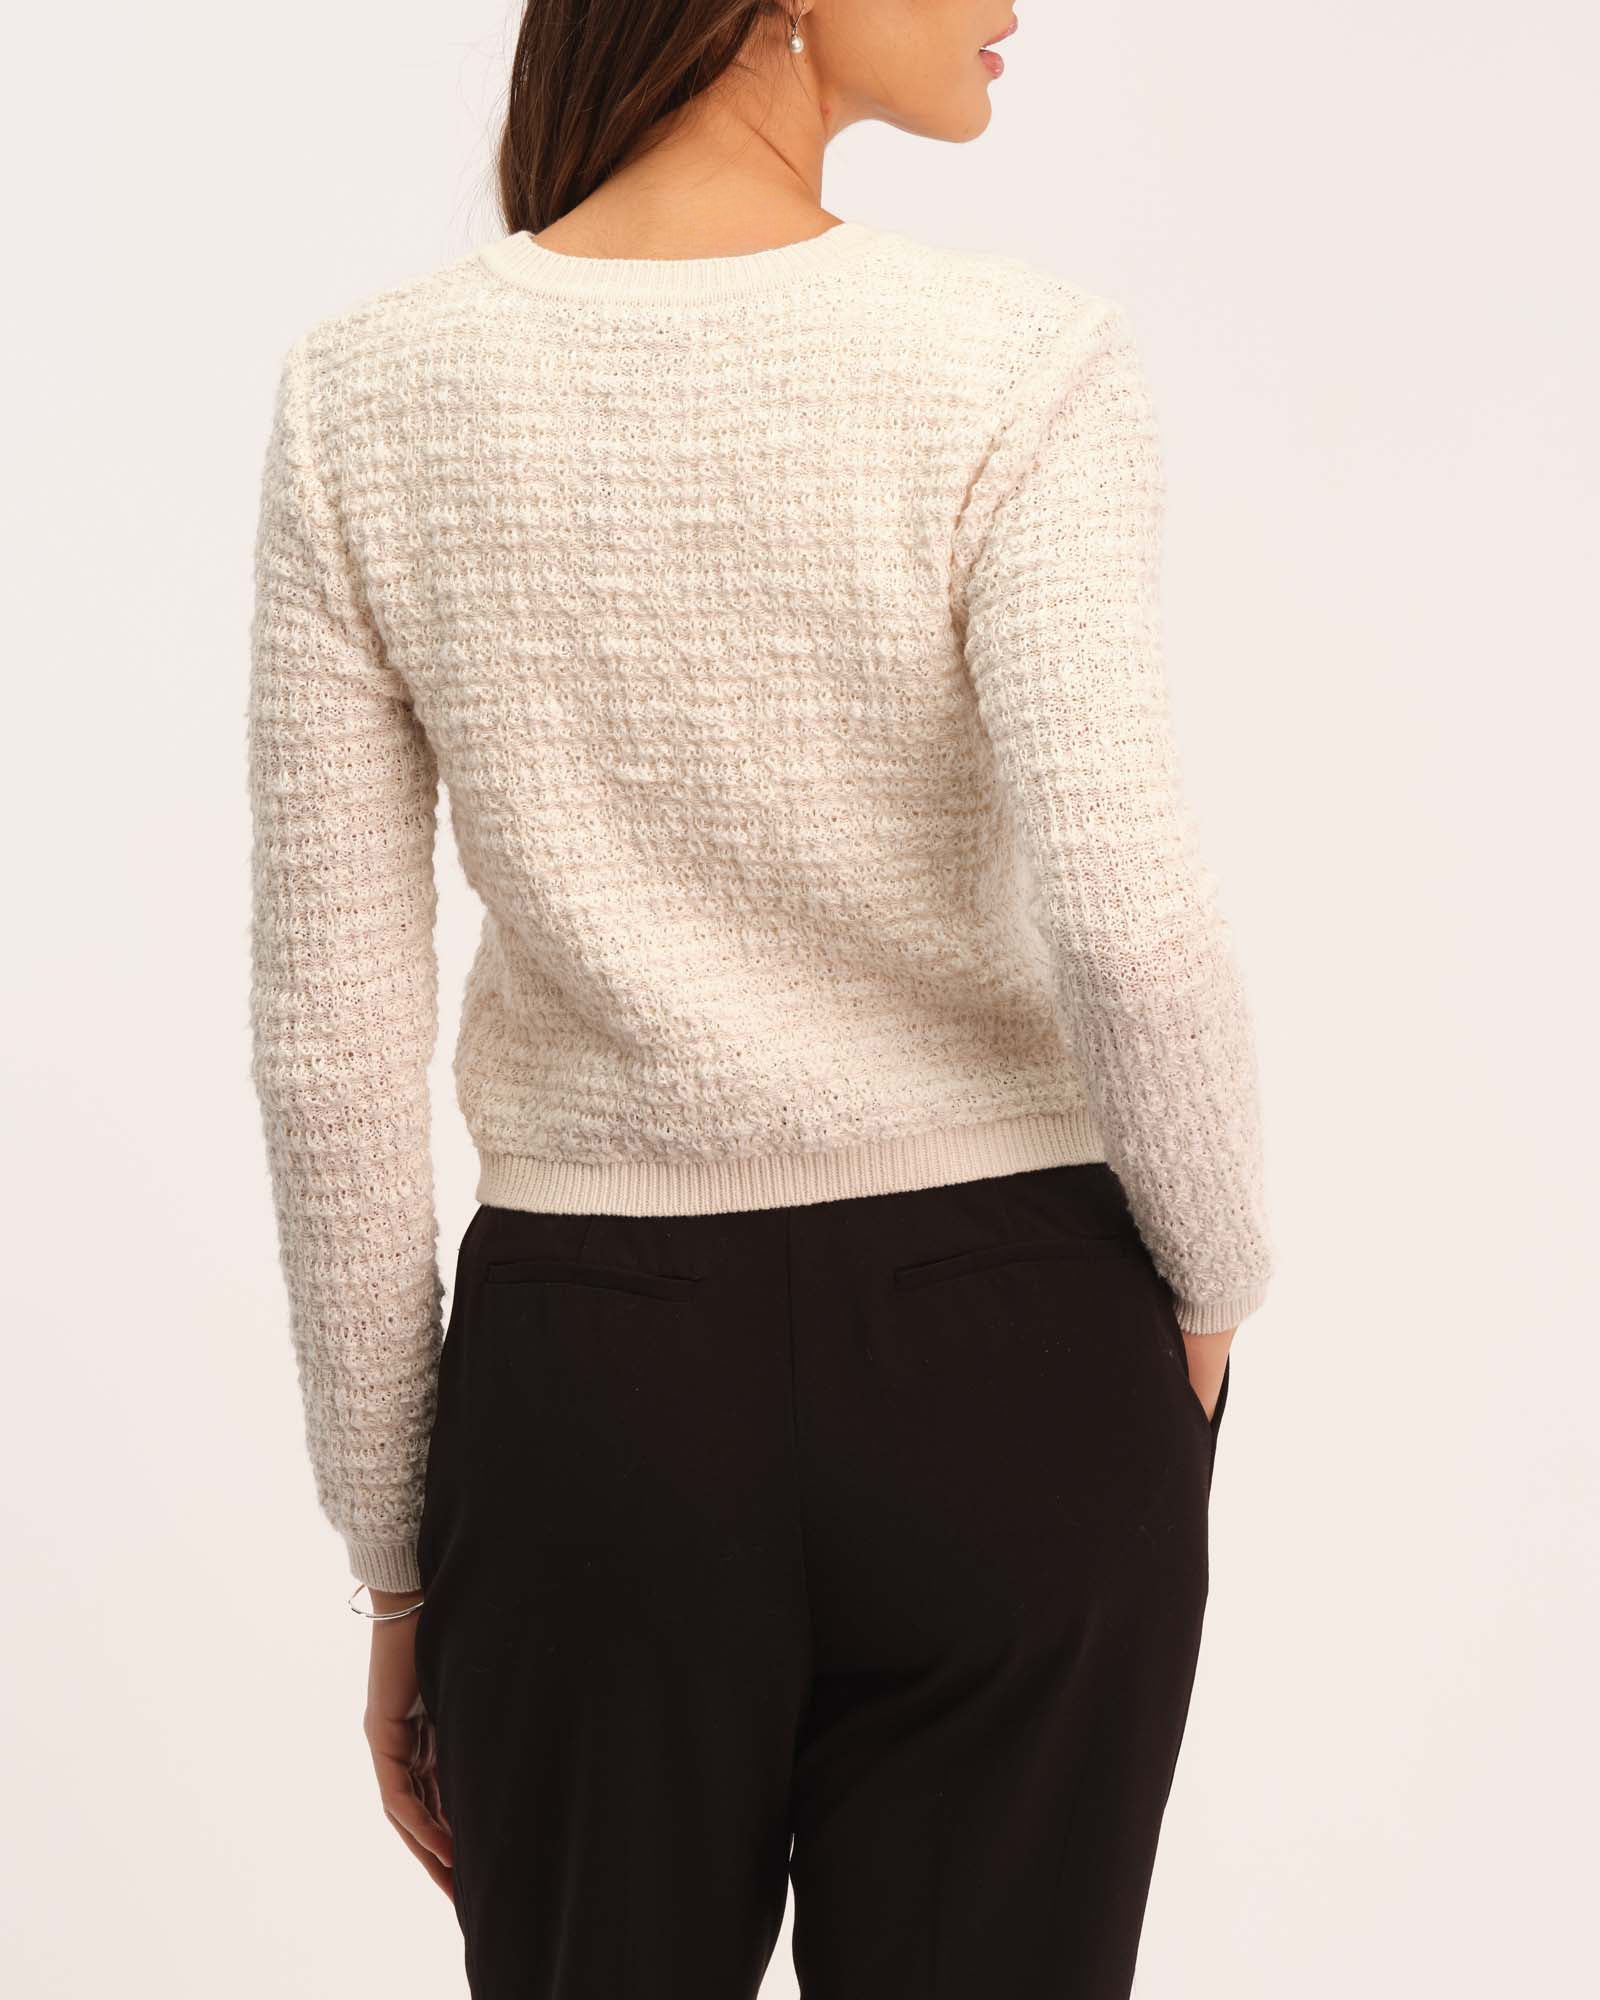 Shop T Tahari Women's Pearl Rhinestone Button Front Sweater Jacket | JANE + MERCER